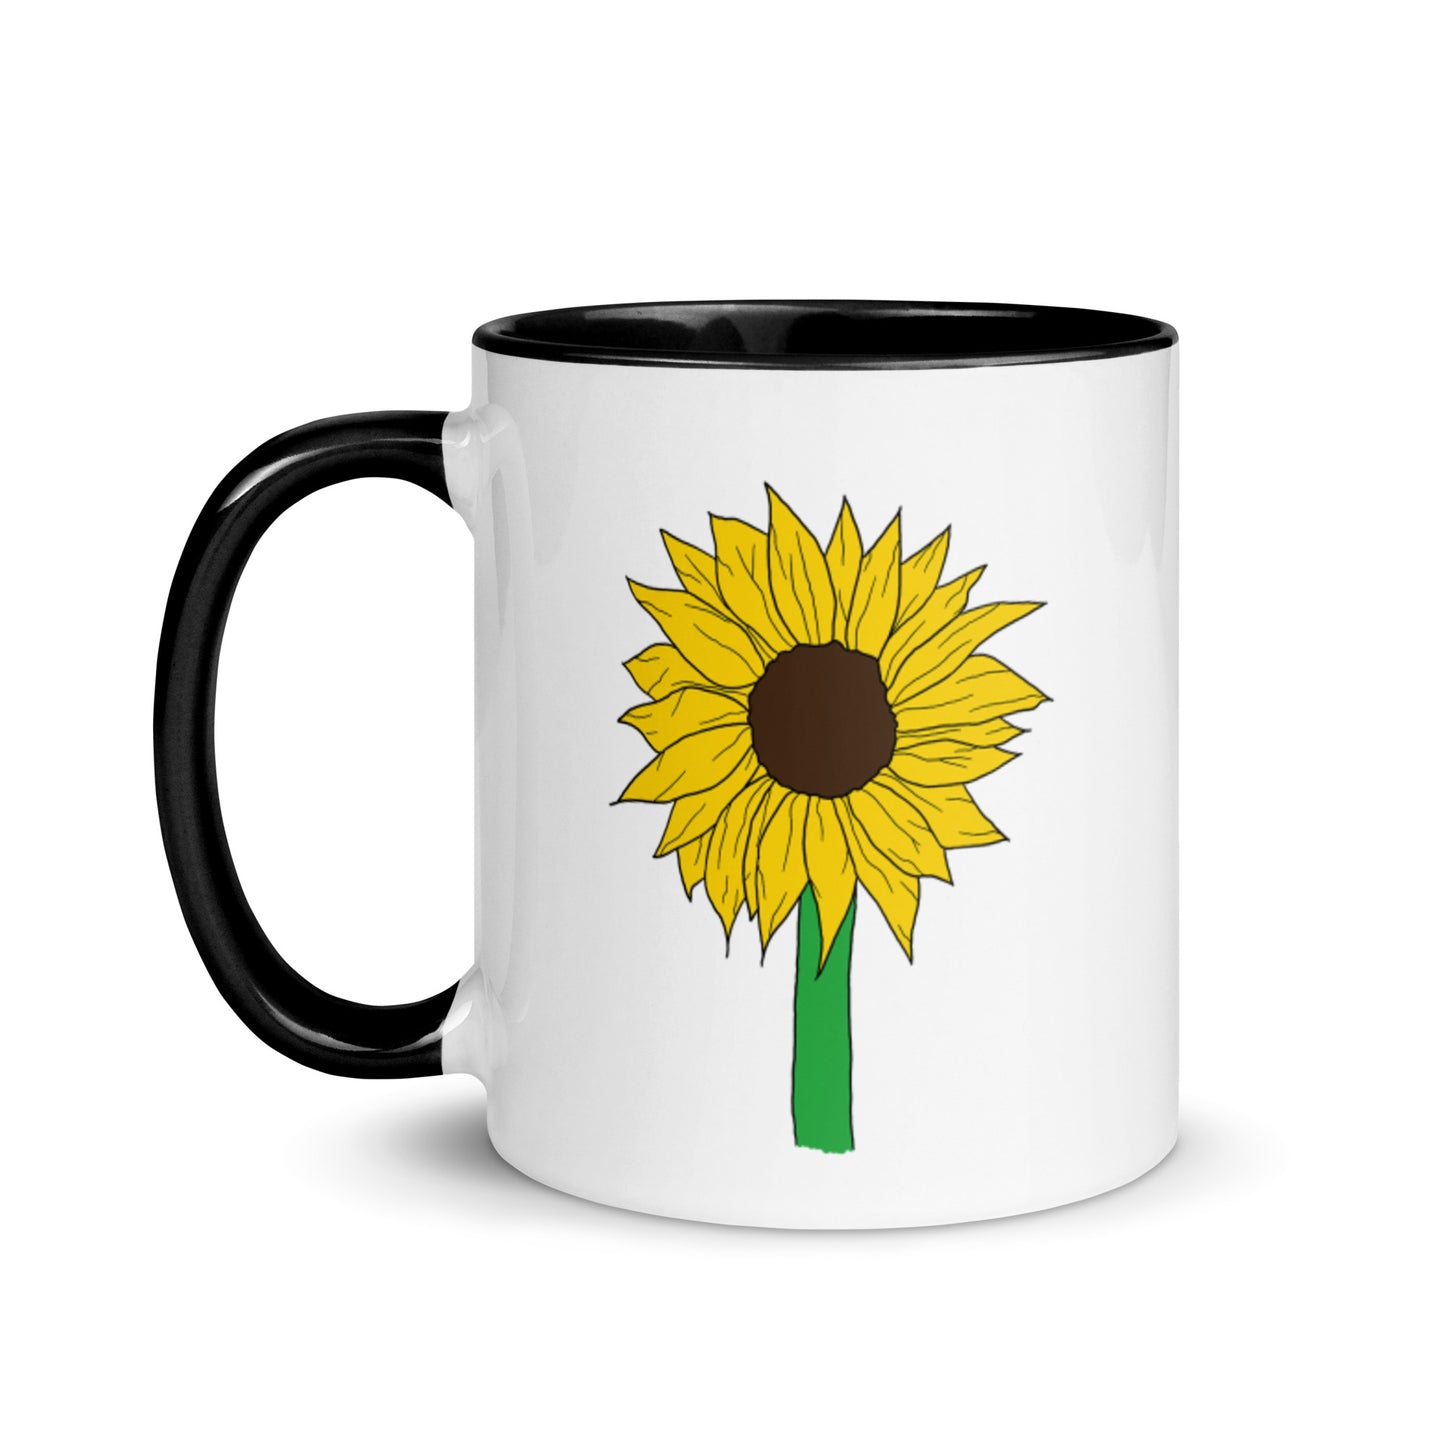 Sunflower Mug 11 ounce - FREE Shipping